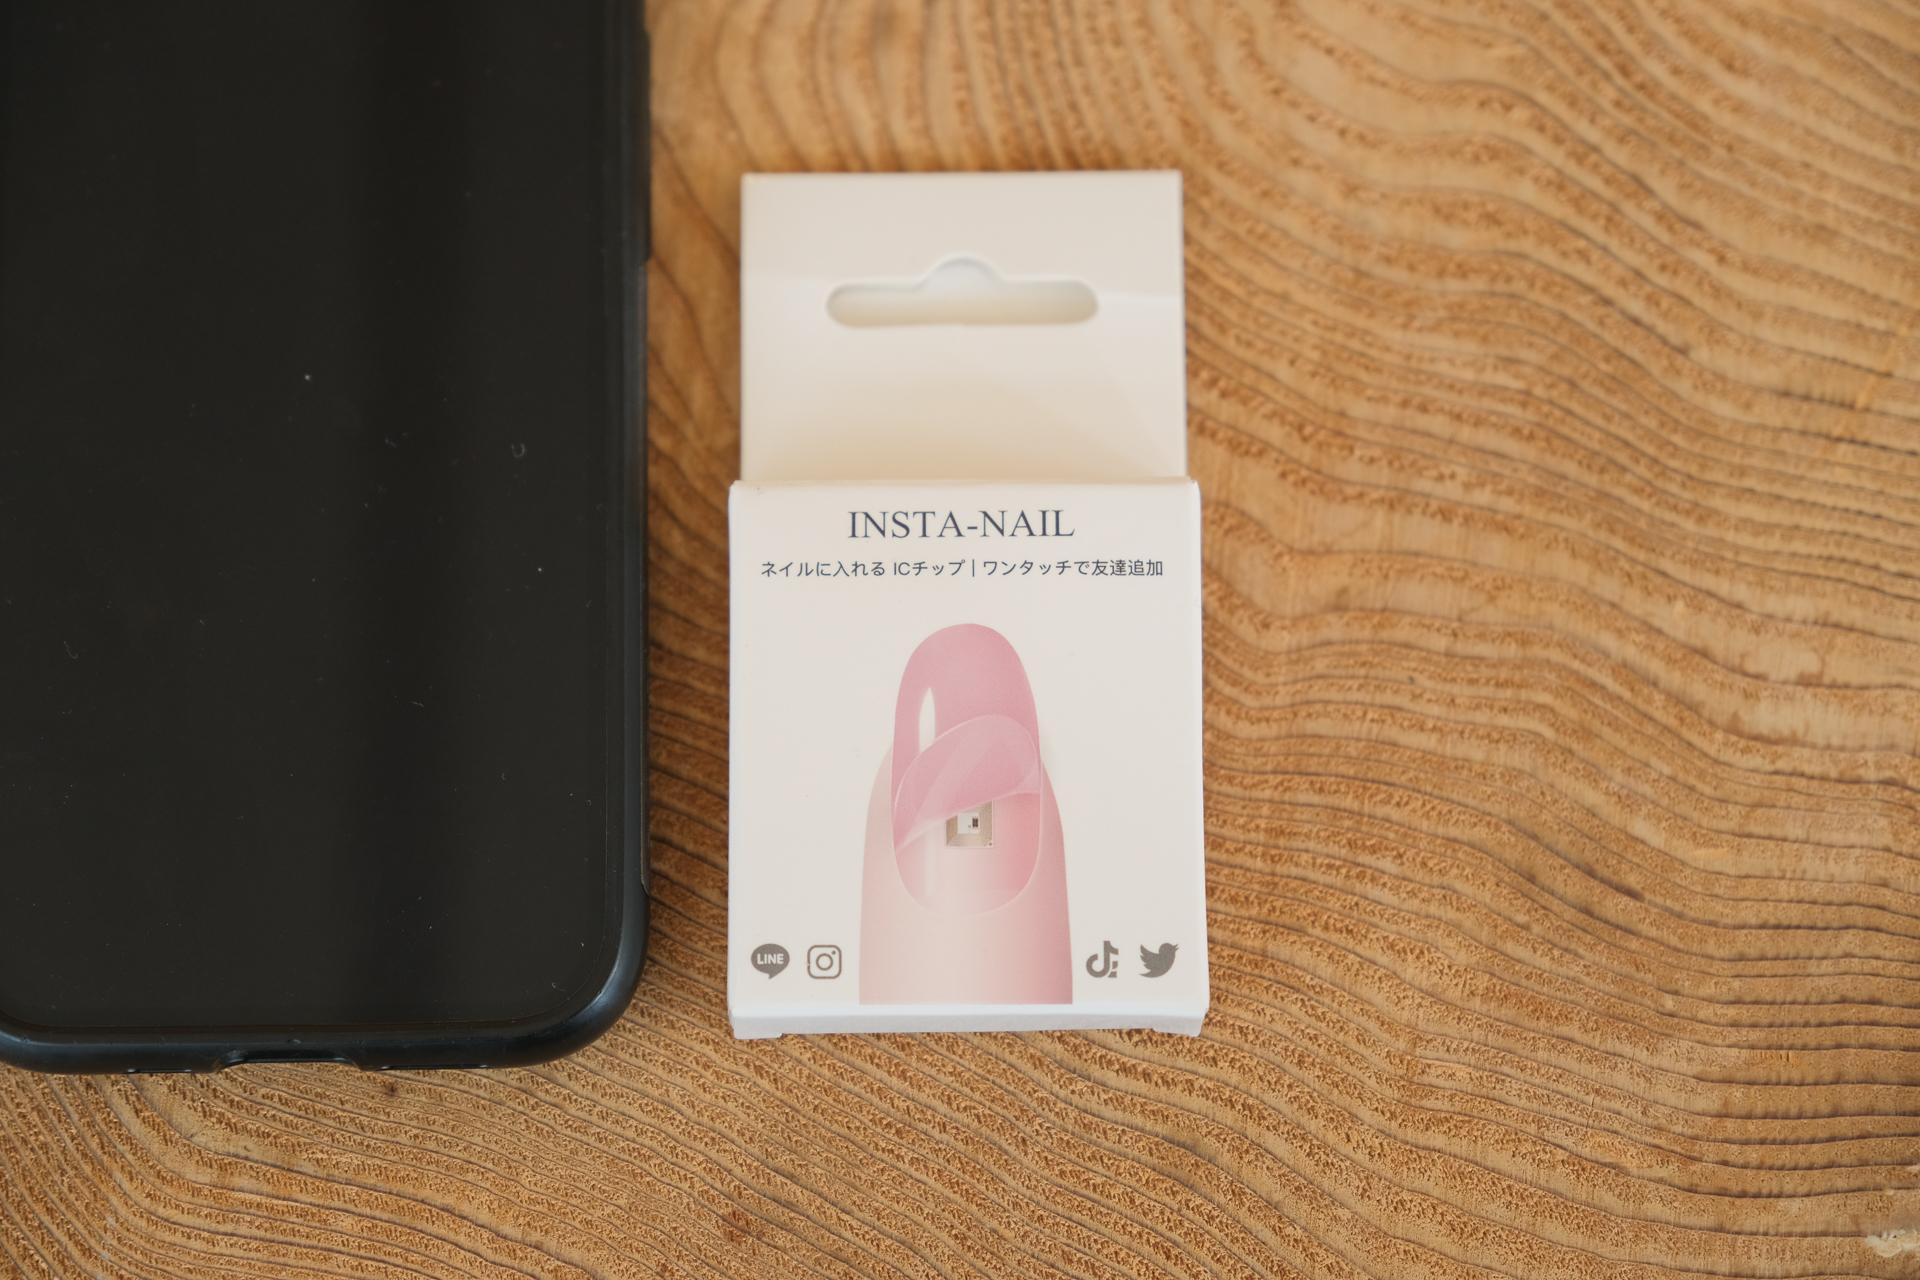 INSTA-NAIL マイクロチップ NFC通信 電池不要 ネイル - スマホアクセサリー